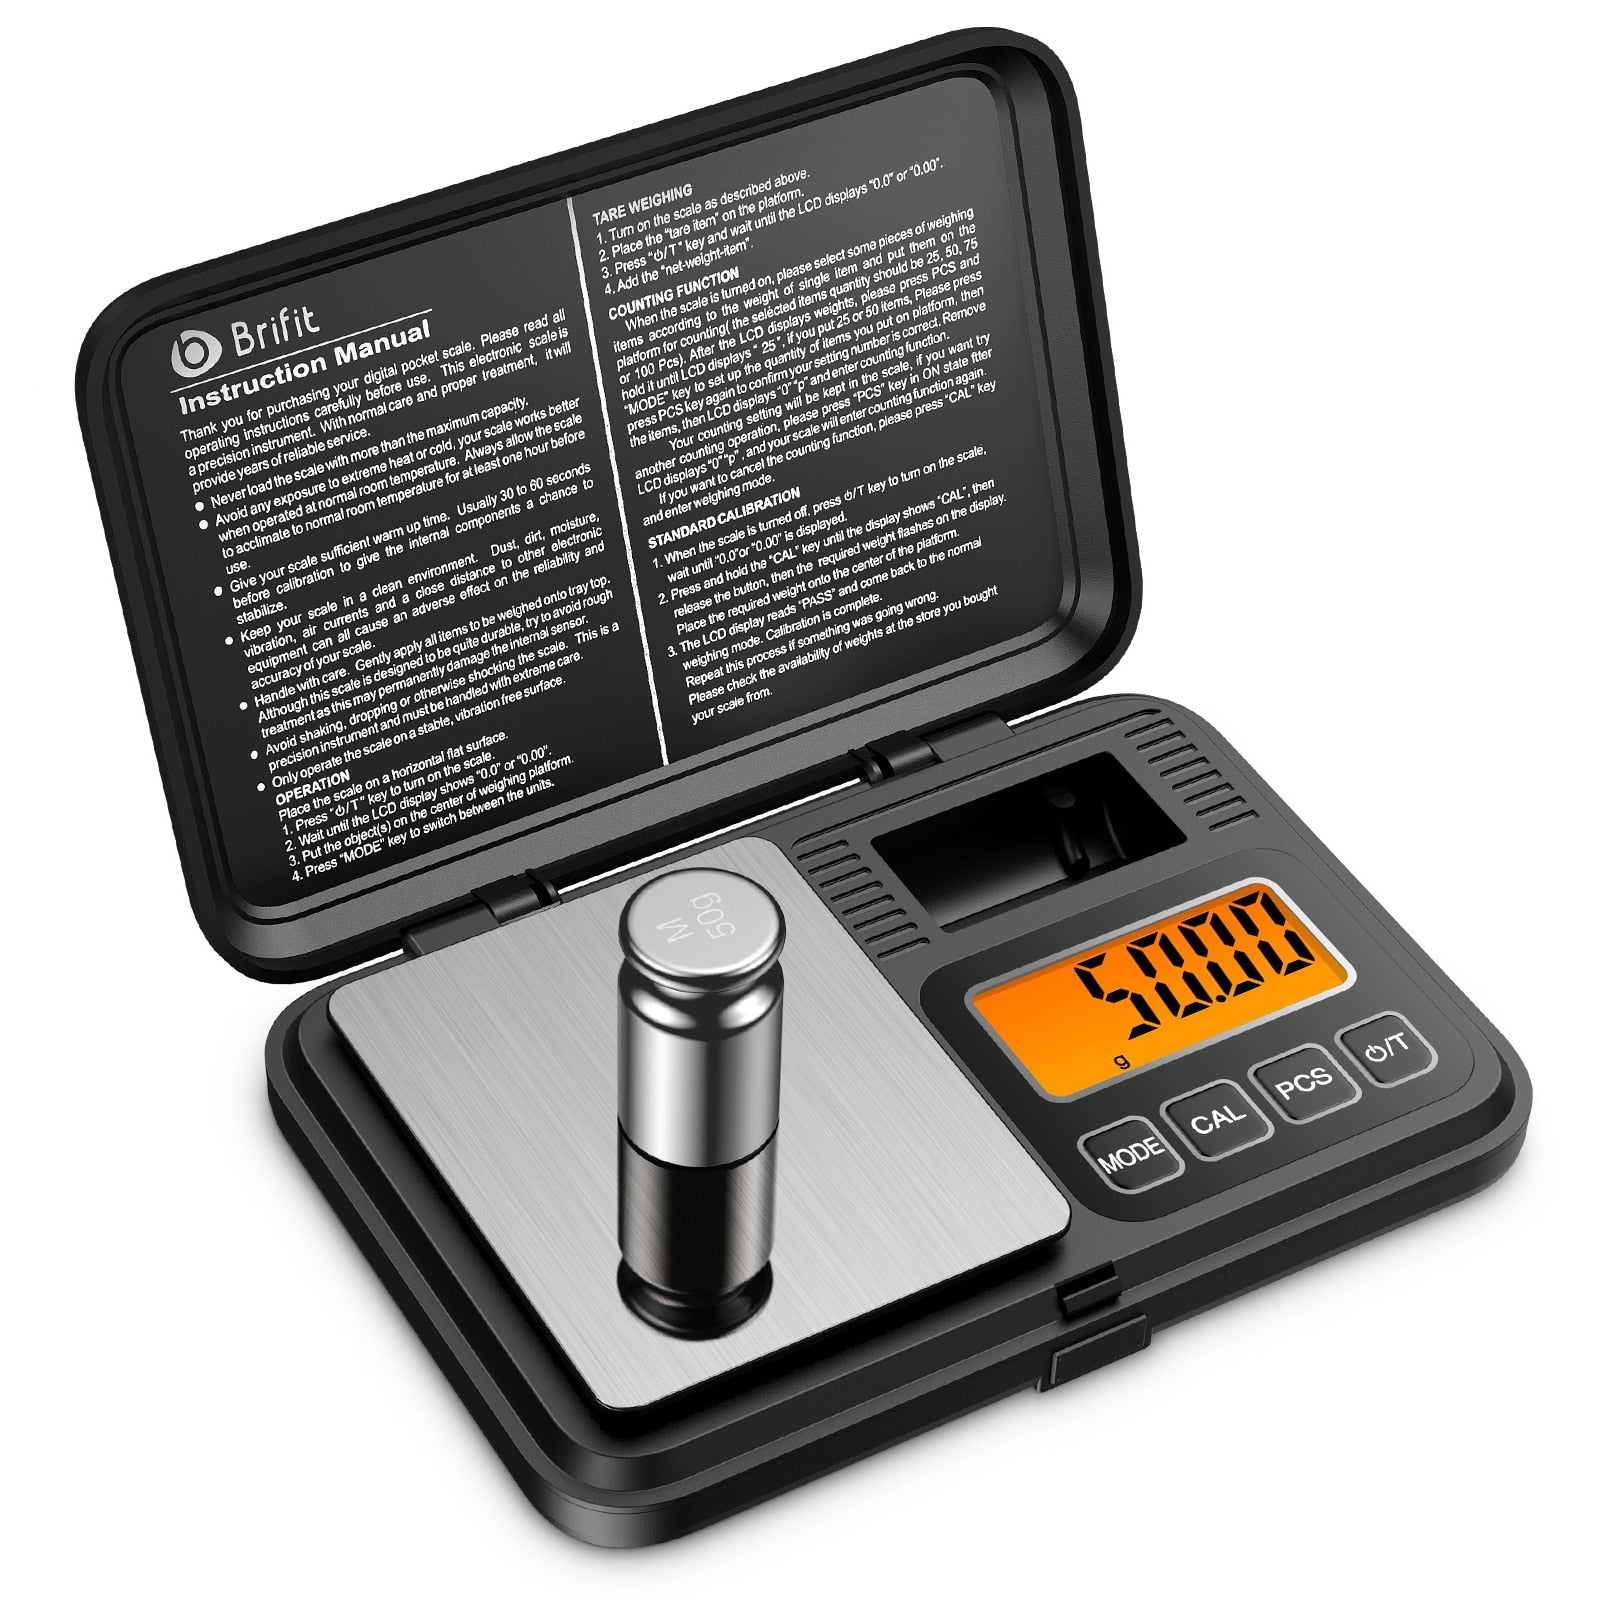 ZENCRO Milligram Scale (50g/ 0.001g) - Mg/Gram Scale, Precision Digital Pocket Kitchen Scale for Powder Medicine/Jewelry/Reloading/Herb(Including